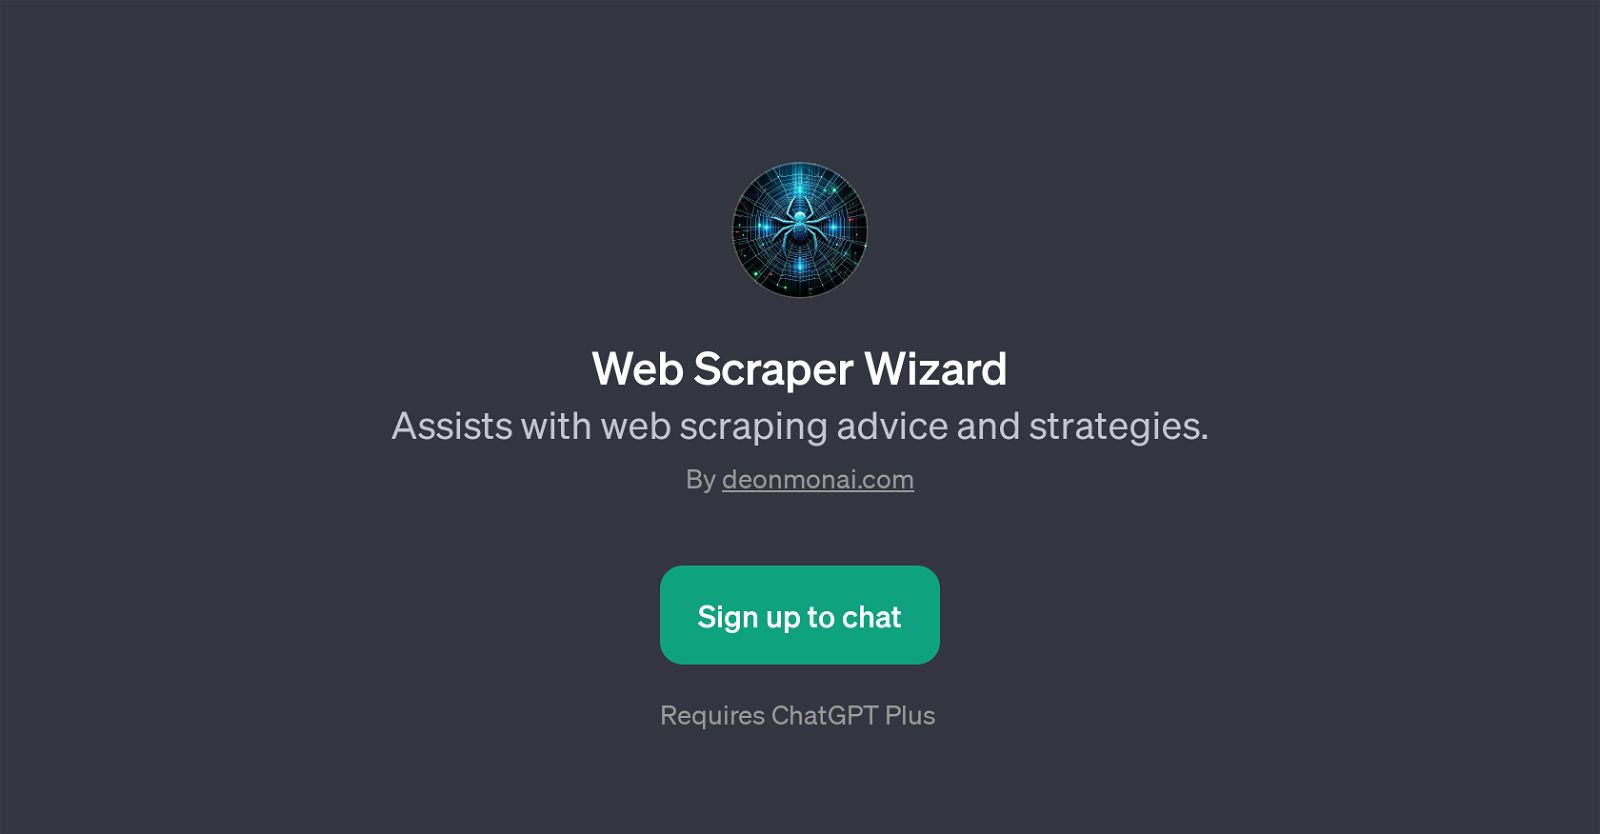 Web Scraper Wizard website